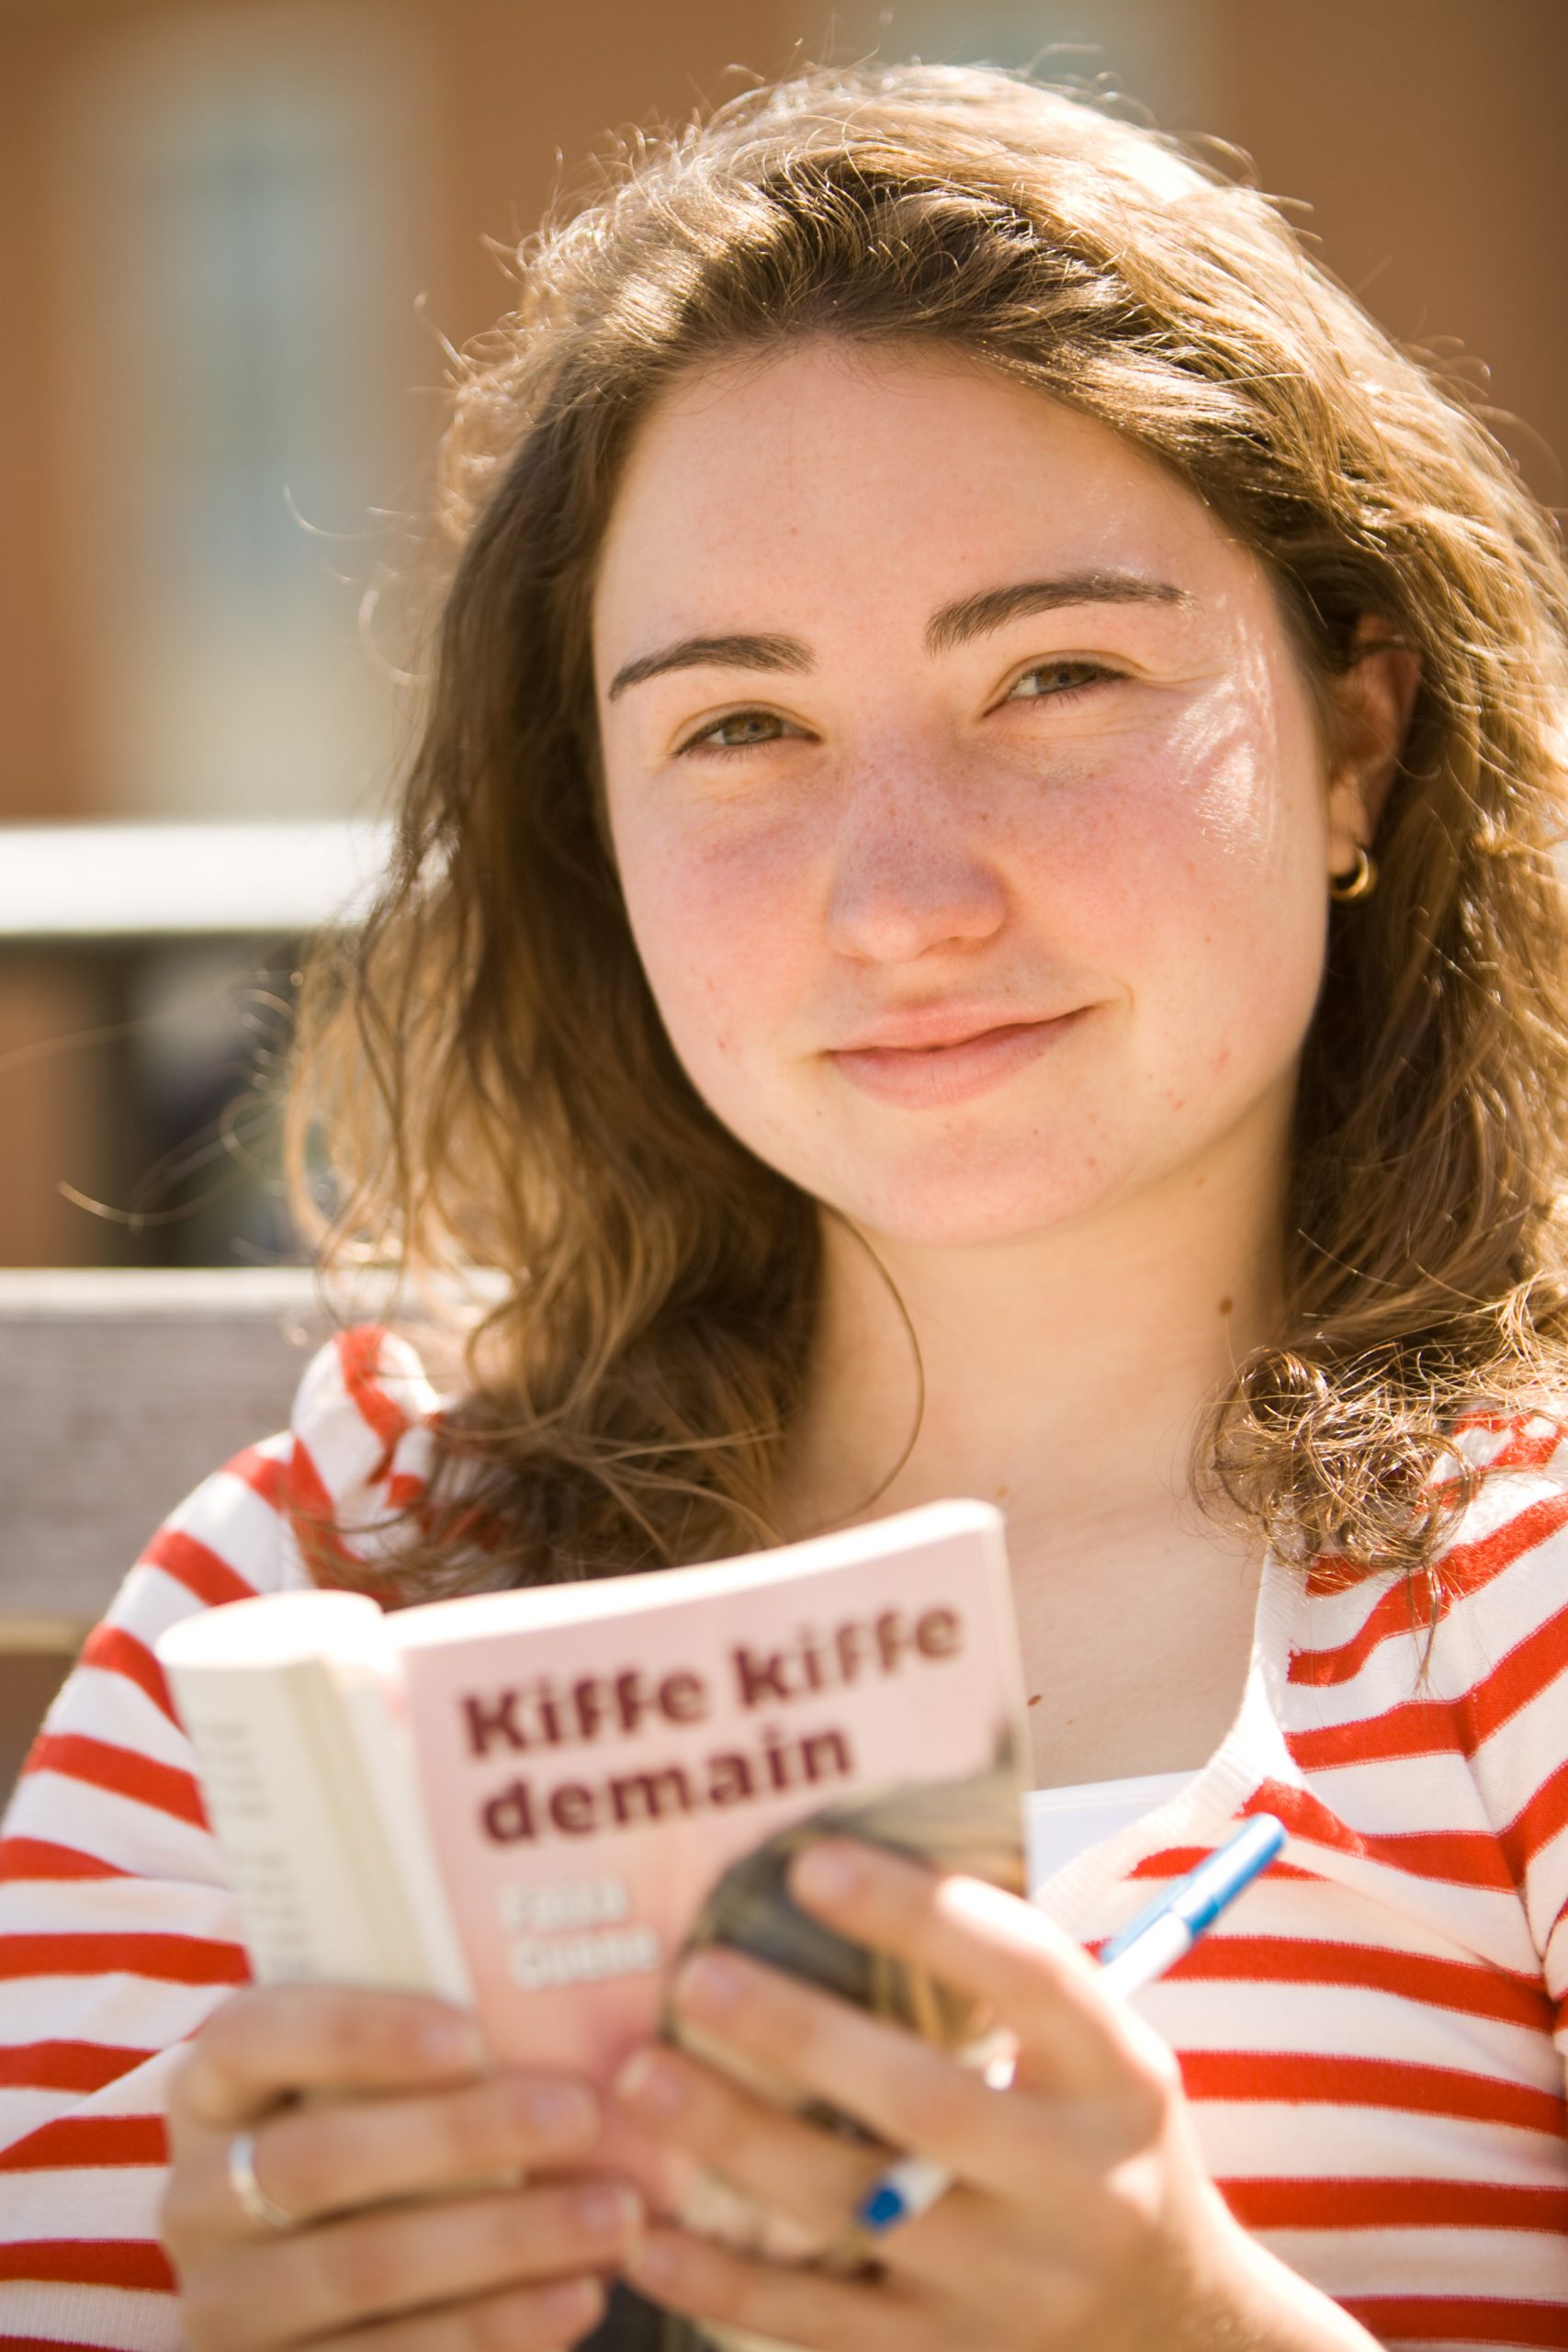 A student reading Kiffe kiffe demain outdoors